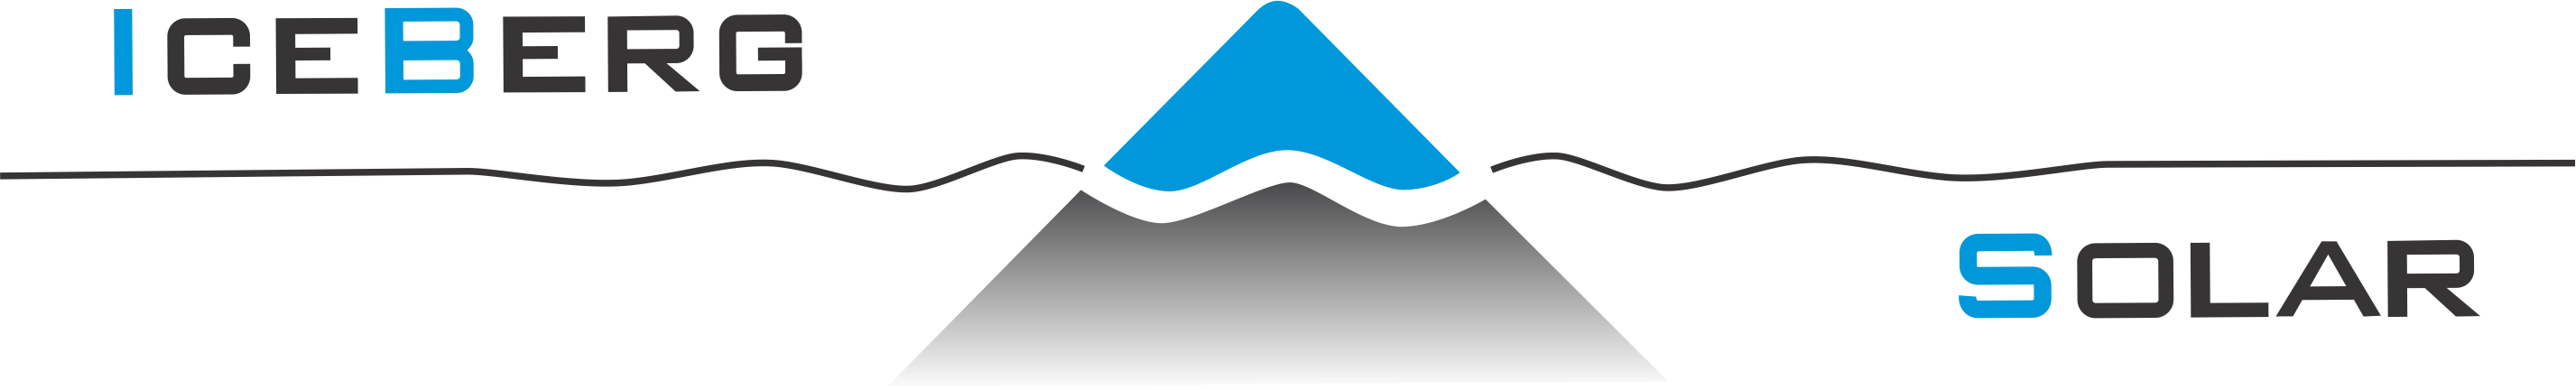 IceBerg Solar Logo